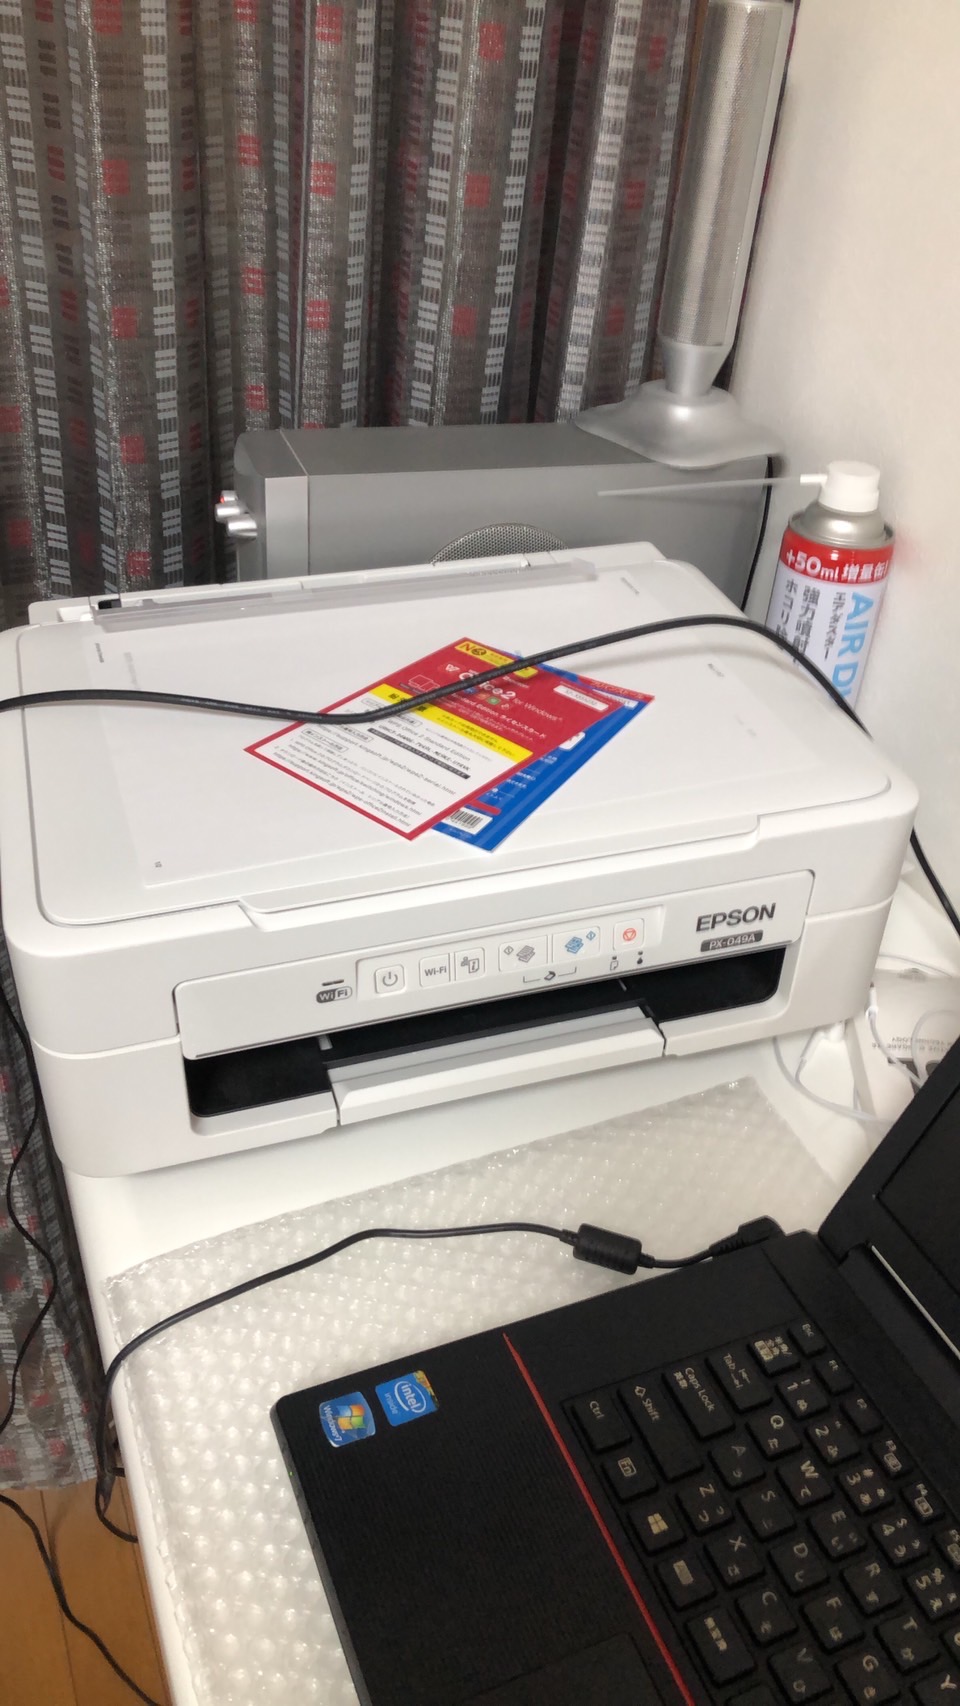 computer-printer-Collection and disposal